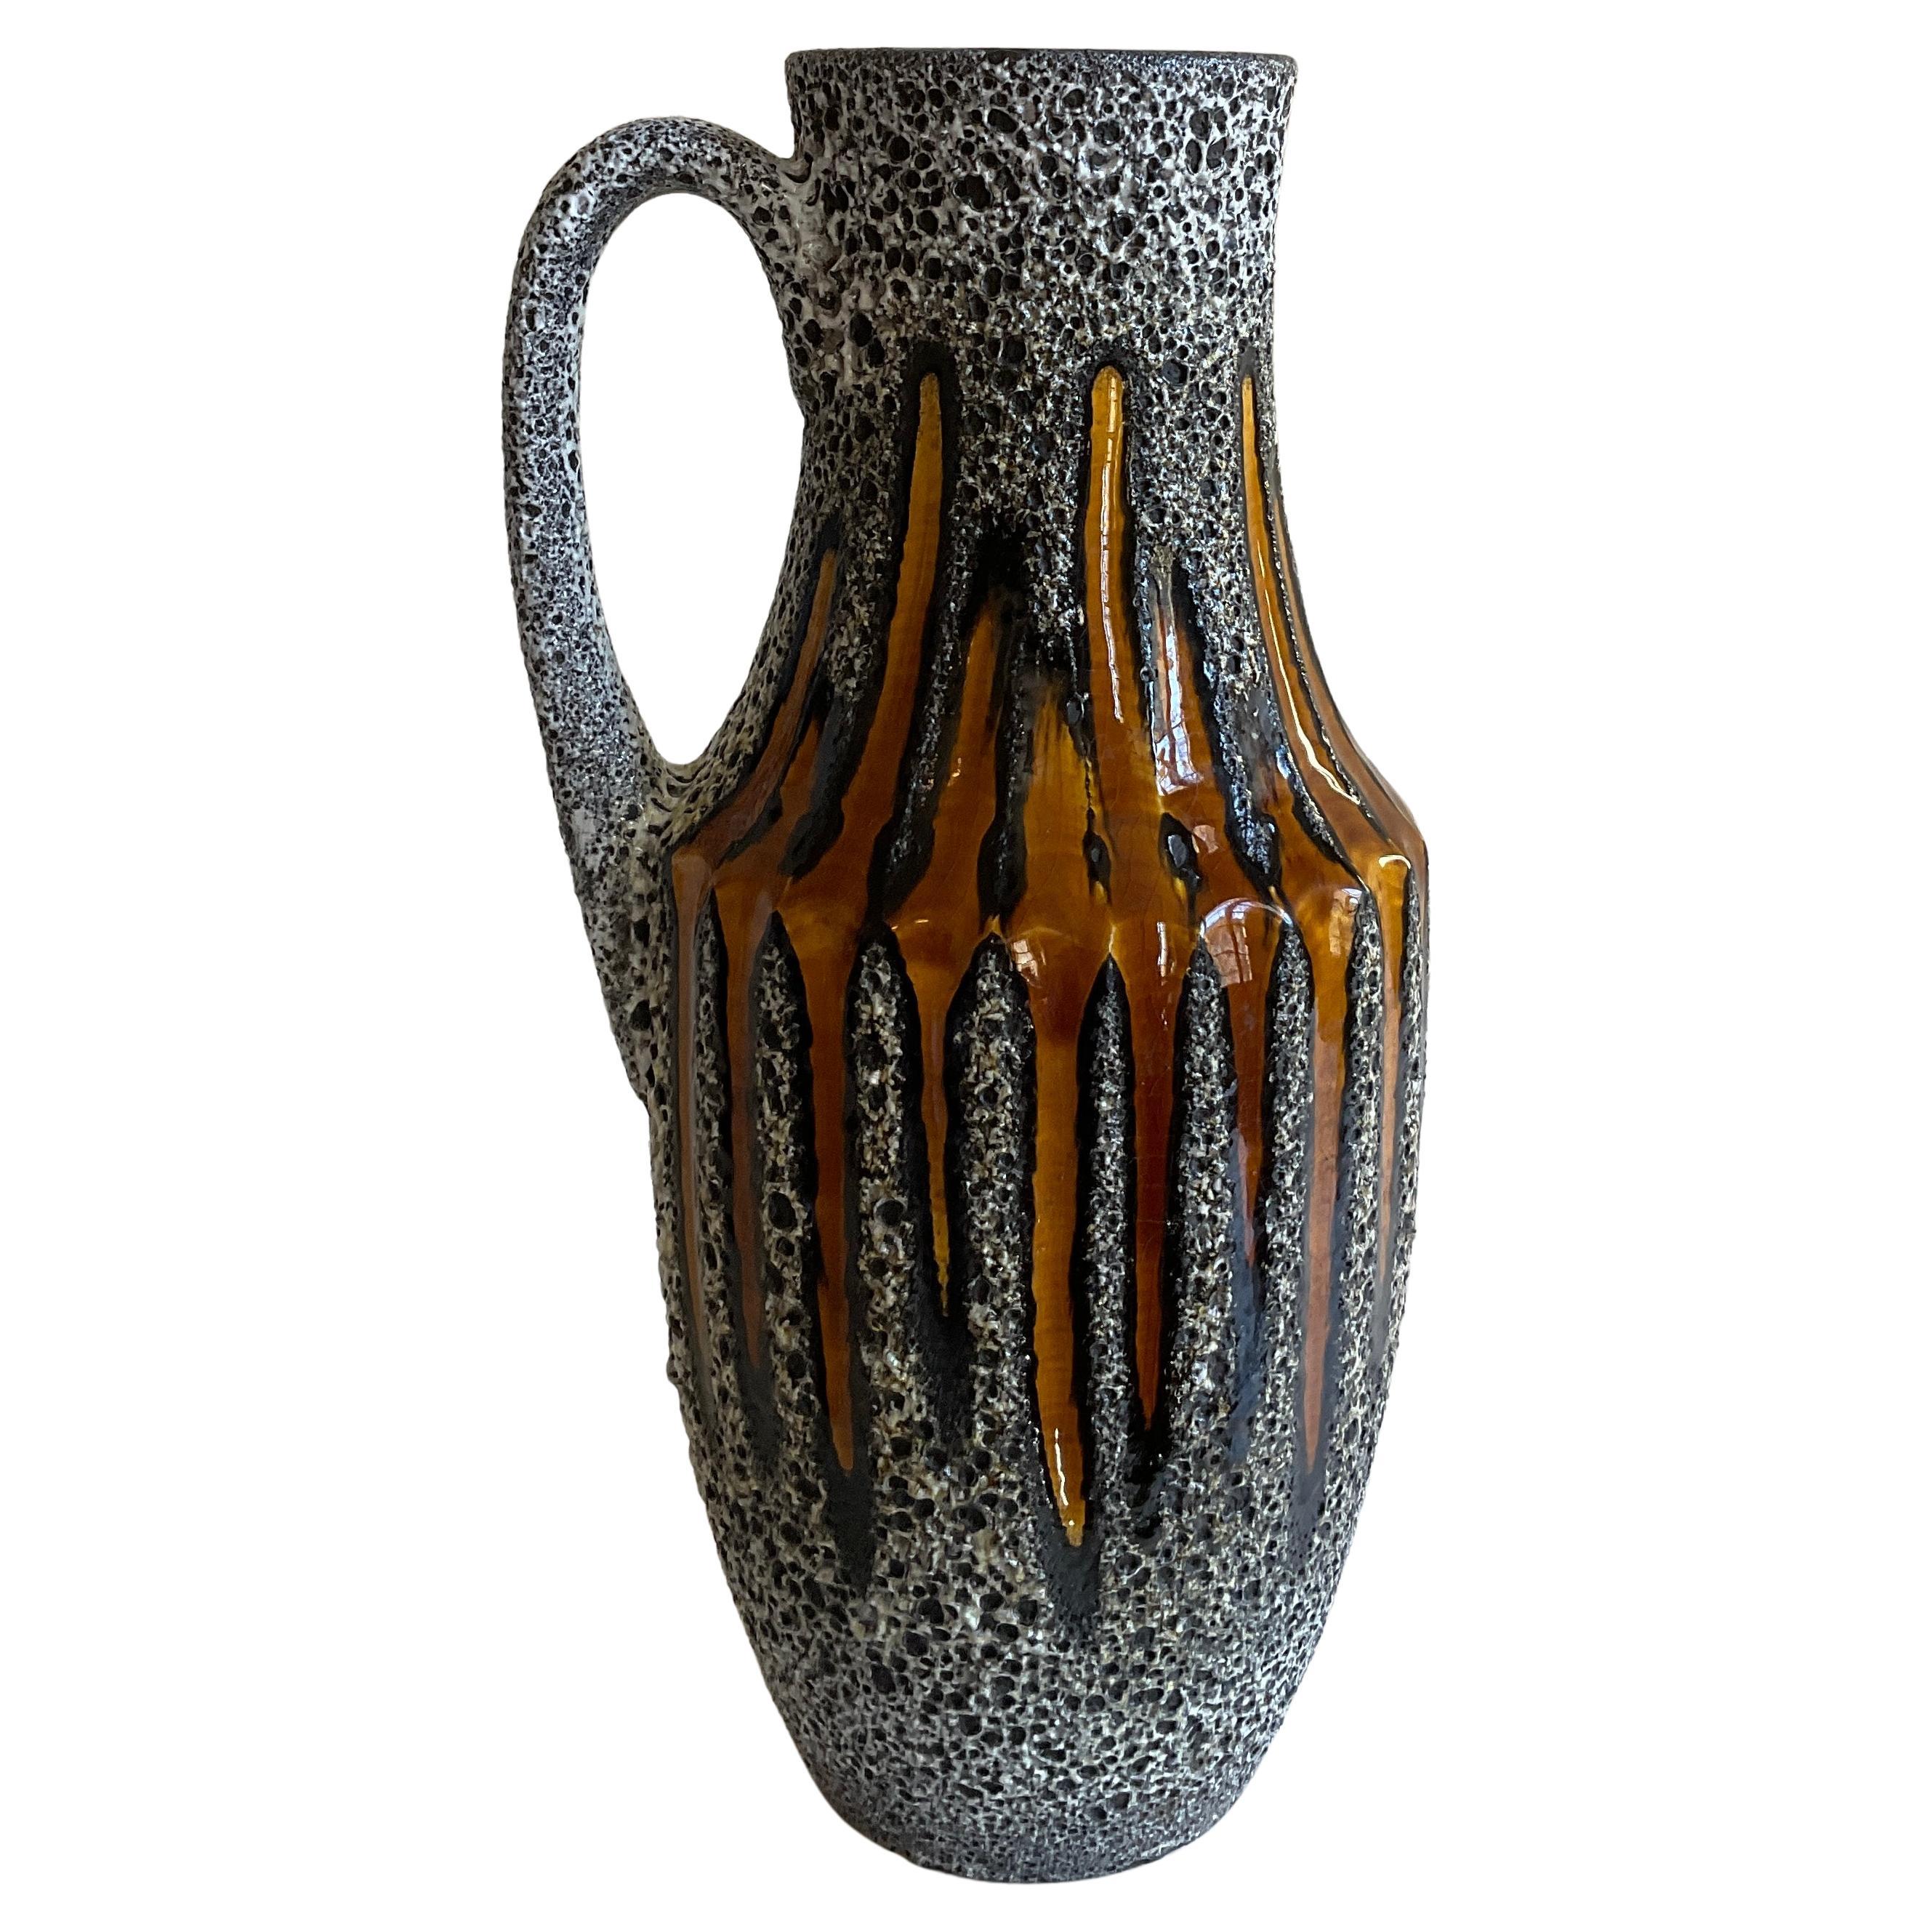 Mid-20th Century West Germany Studio Pottery Pitcher Vase